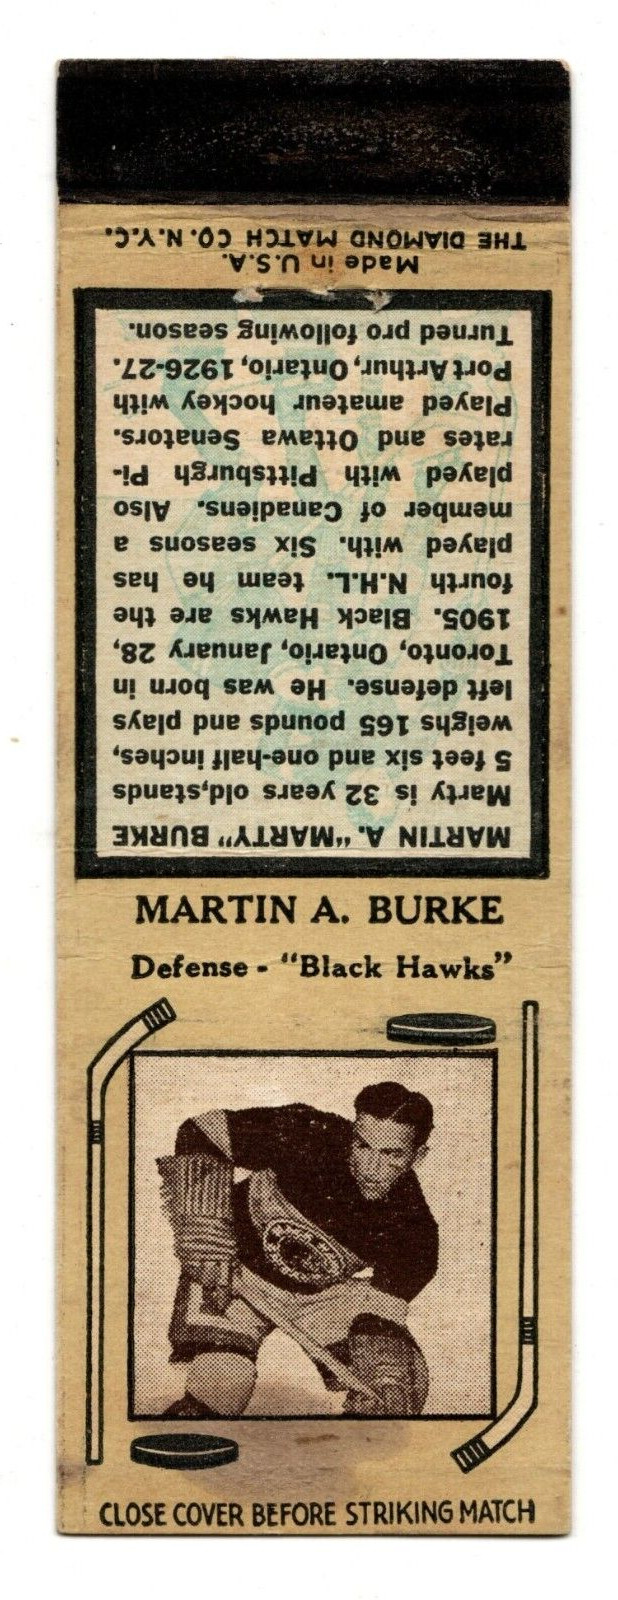 MARTIN BURKE matchbook matchcover - 1935-36 DIAMOND HOCKEY CHICAGO BLACK HAWKS